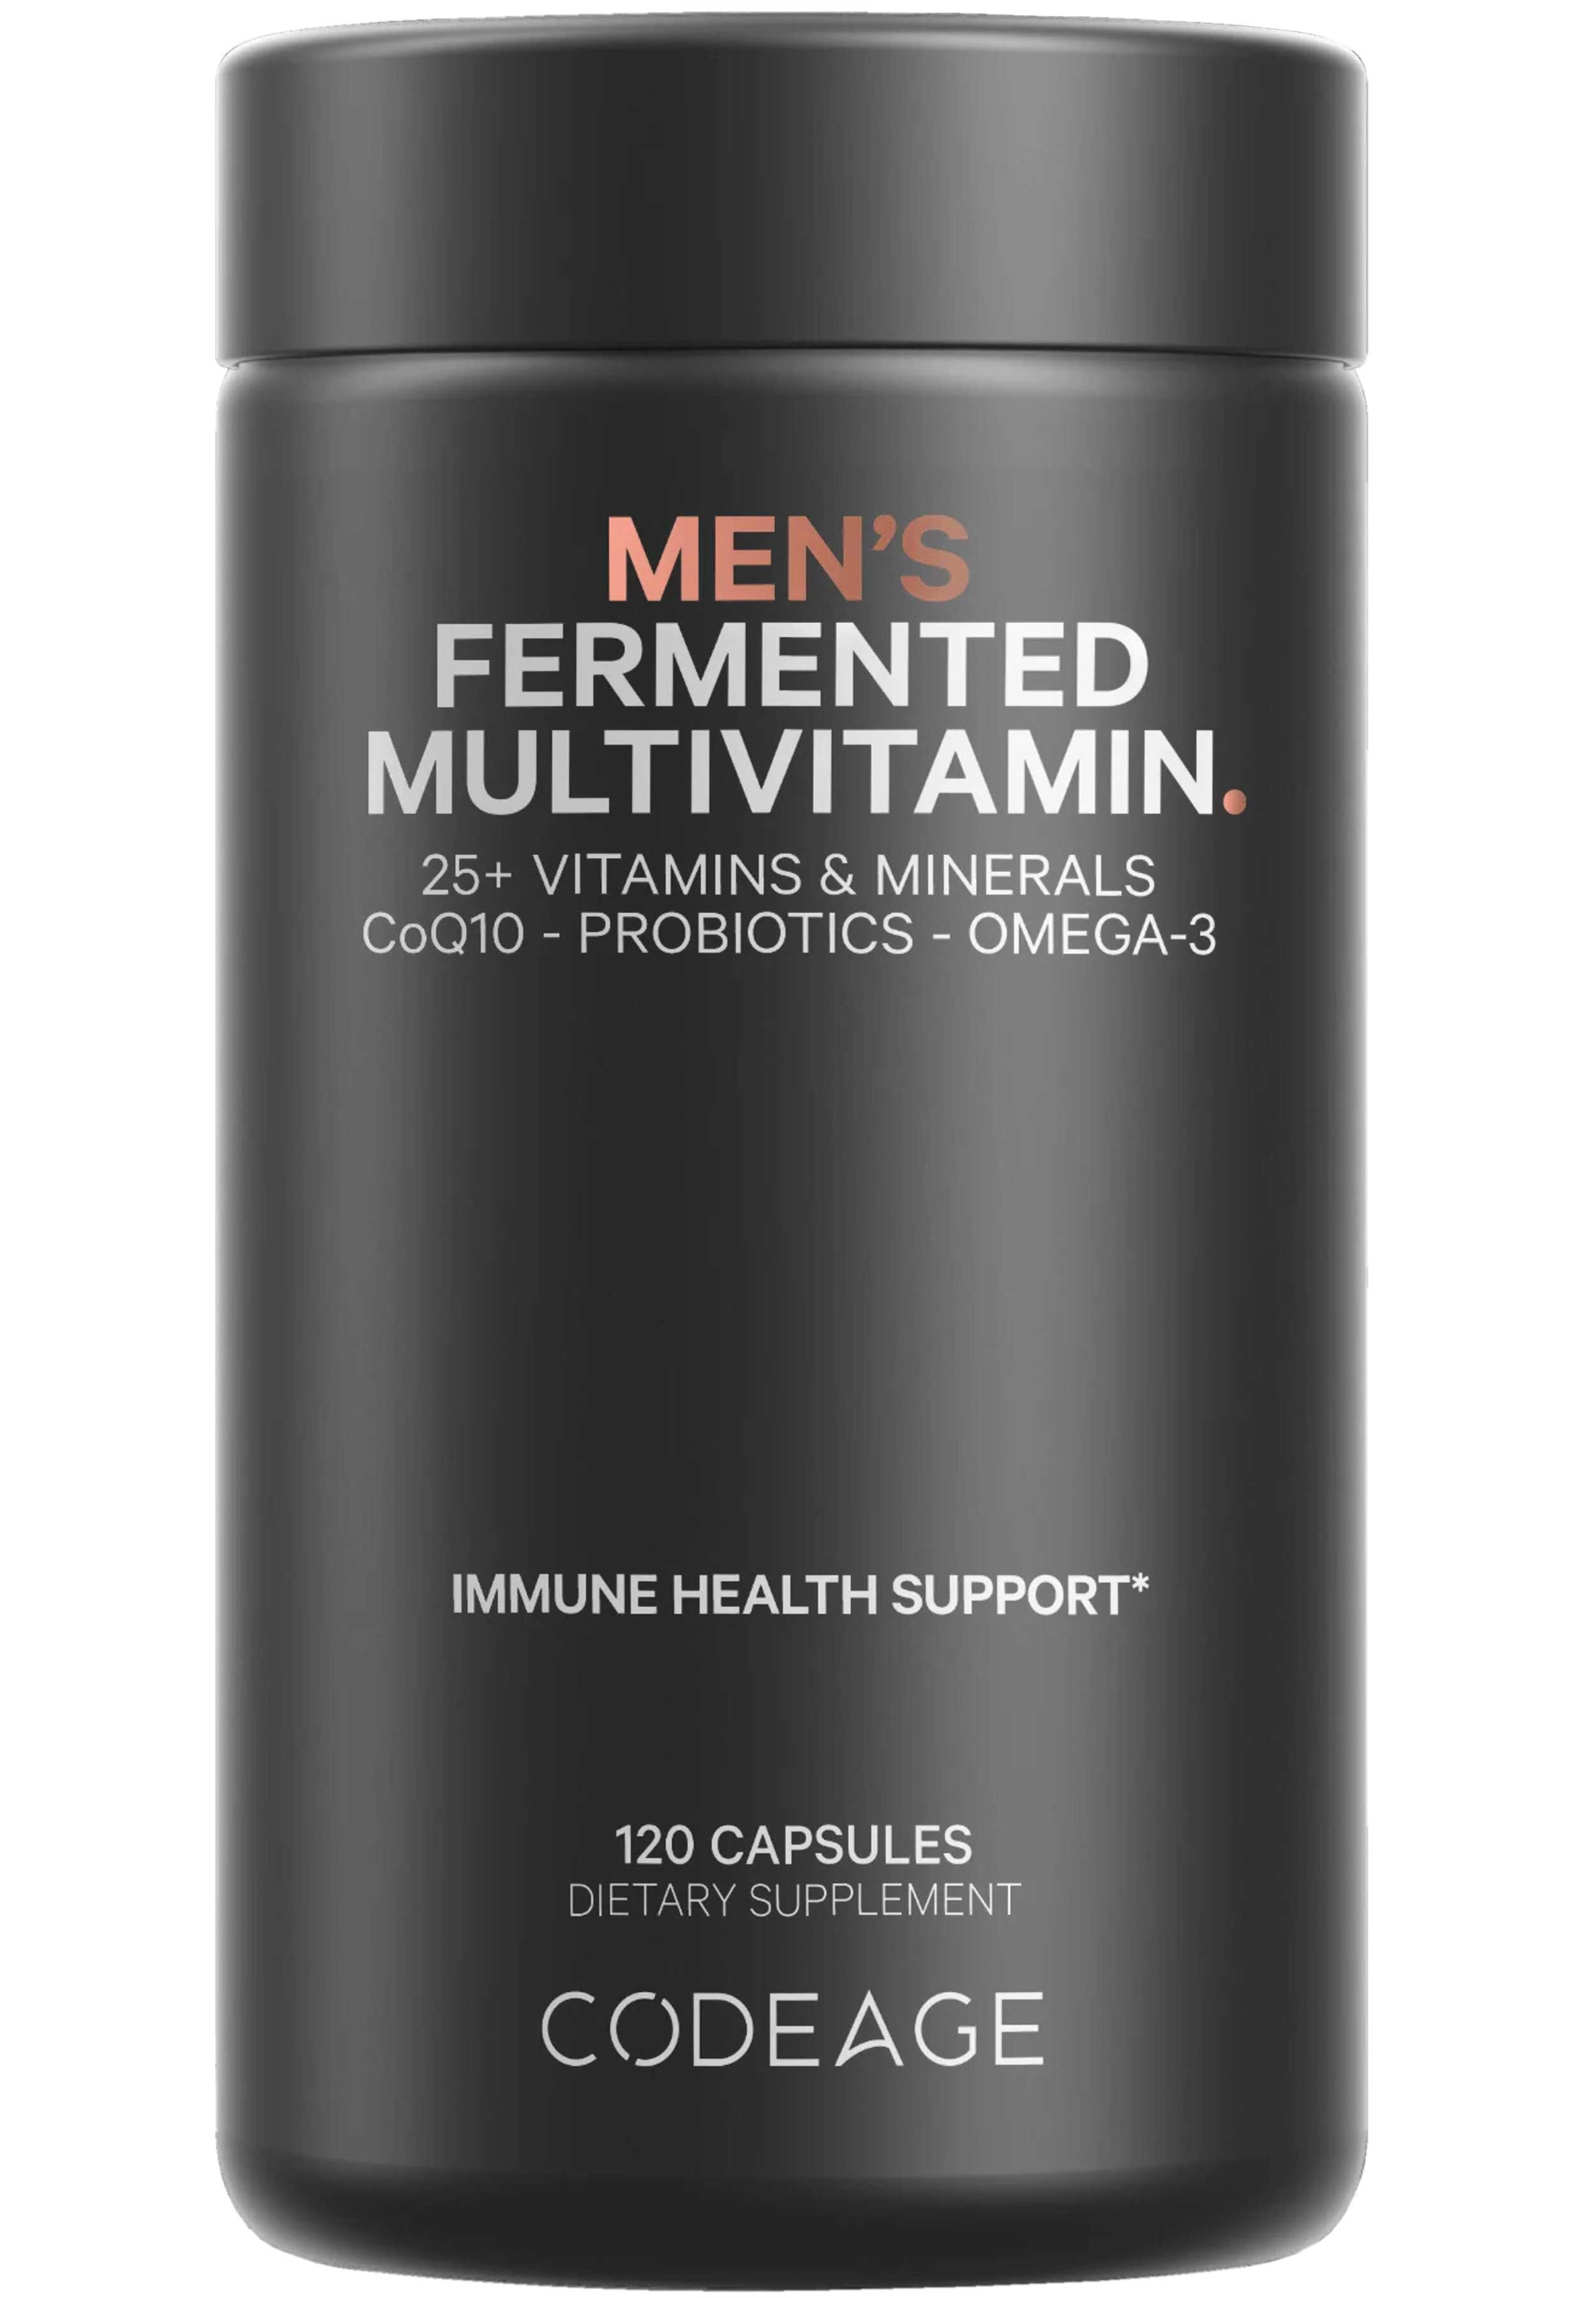 Codeage Men's Fermented Multivitamin